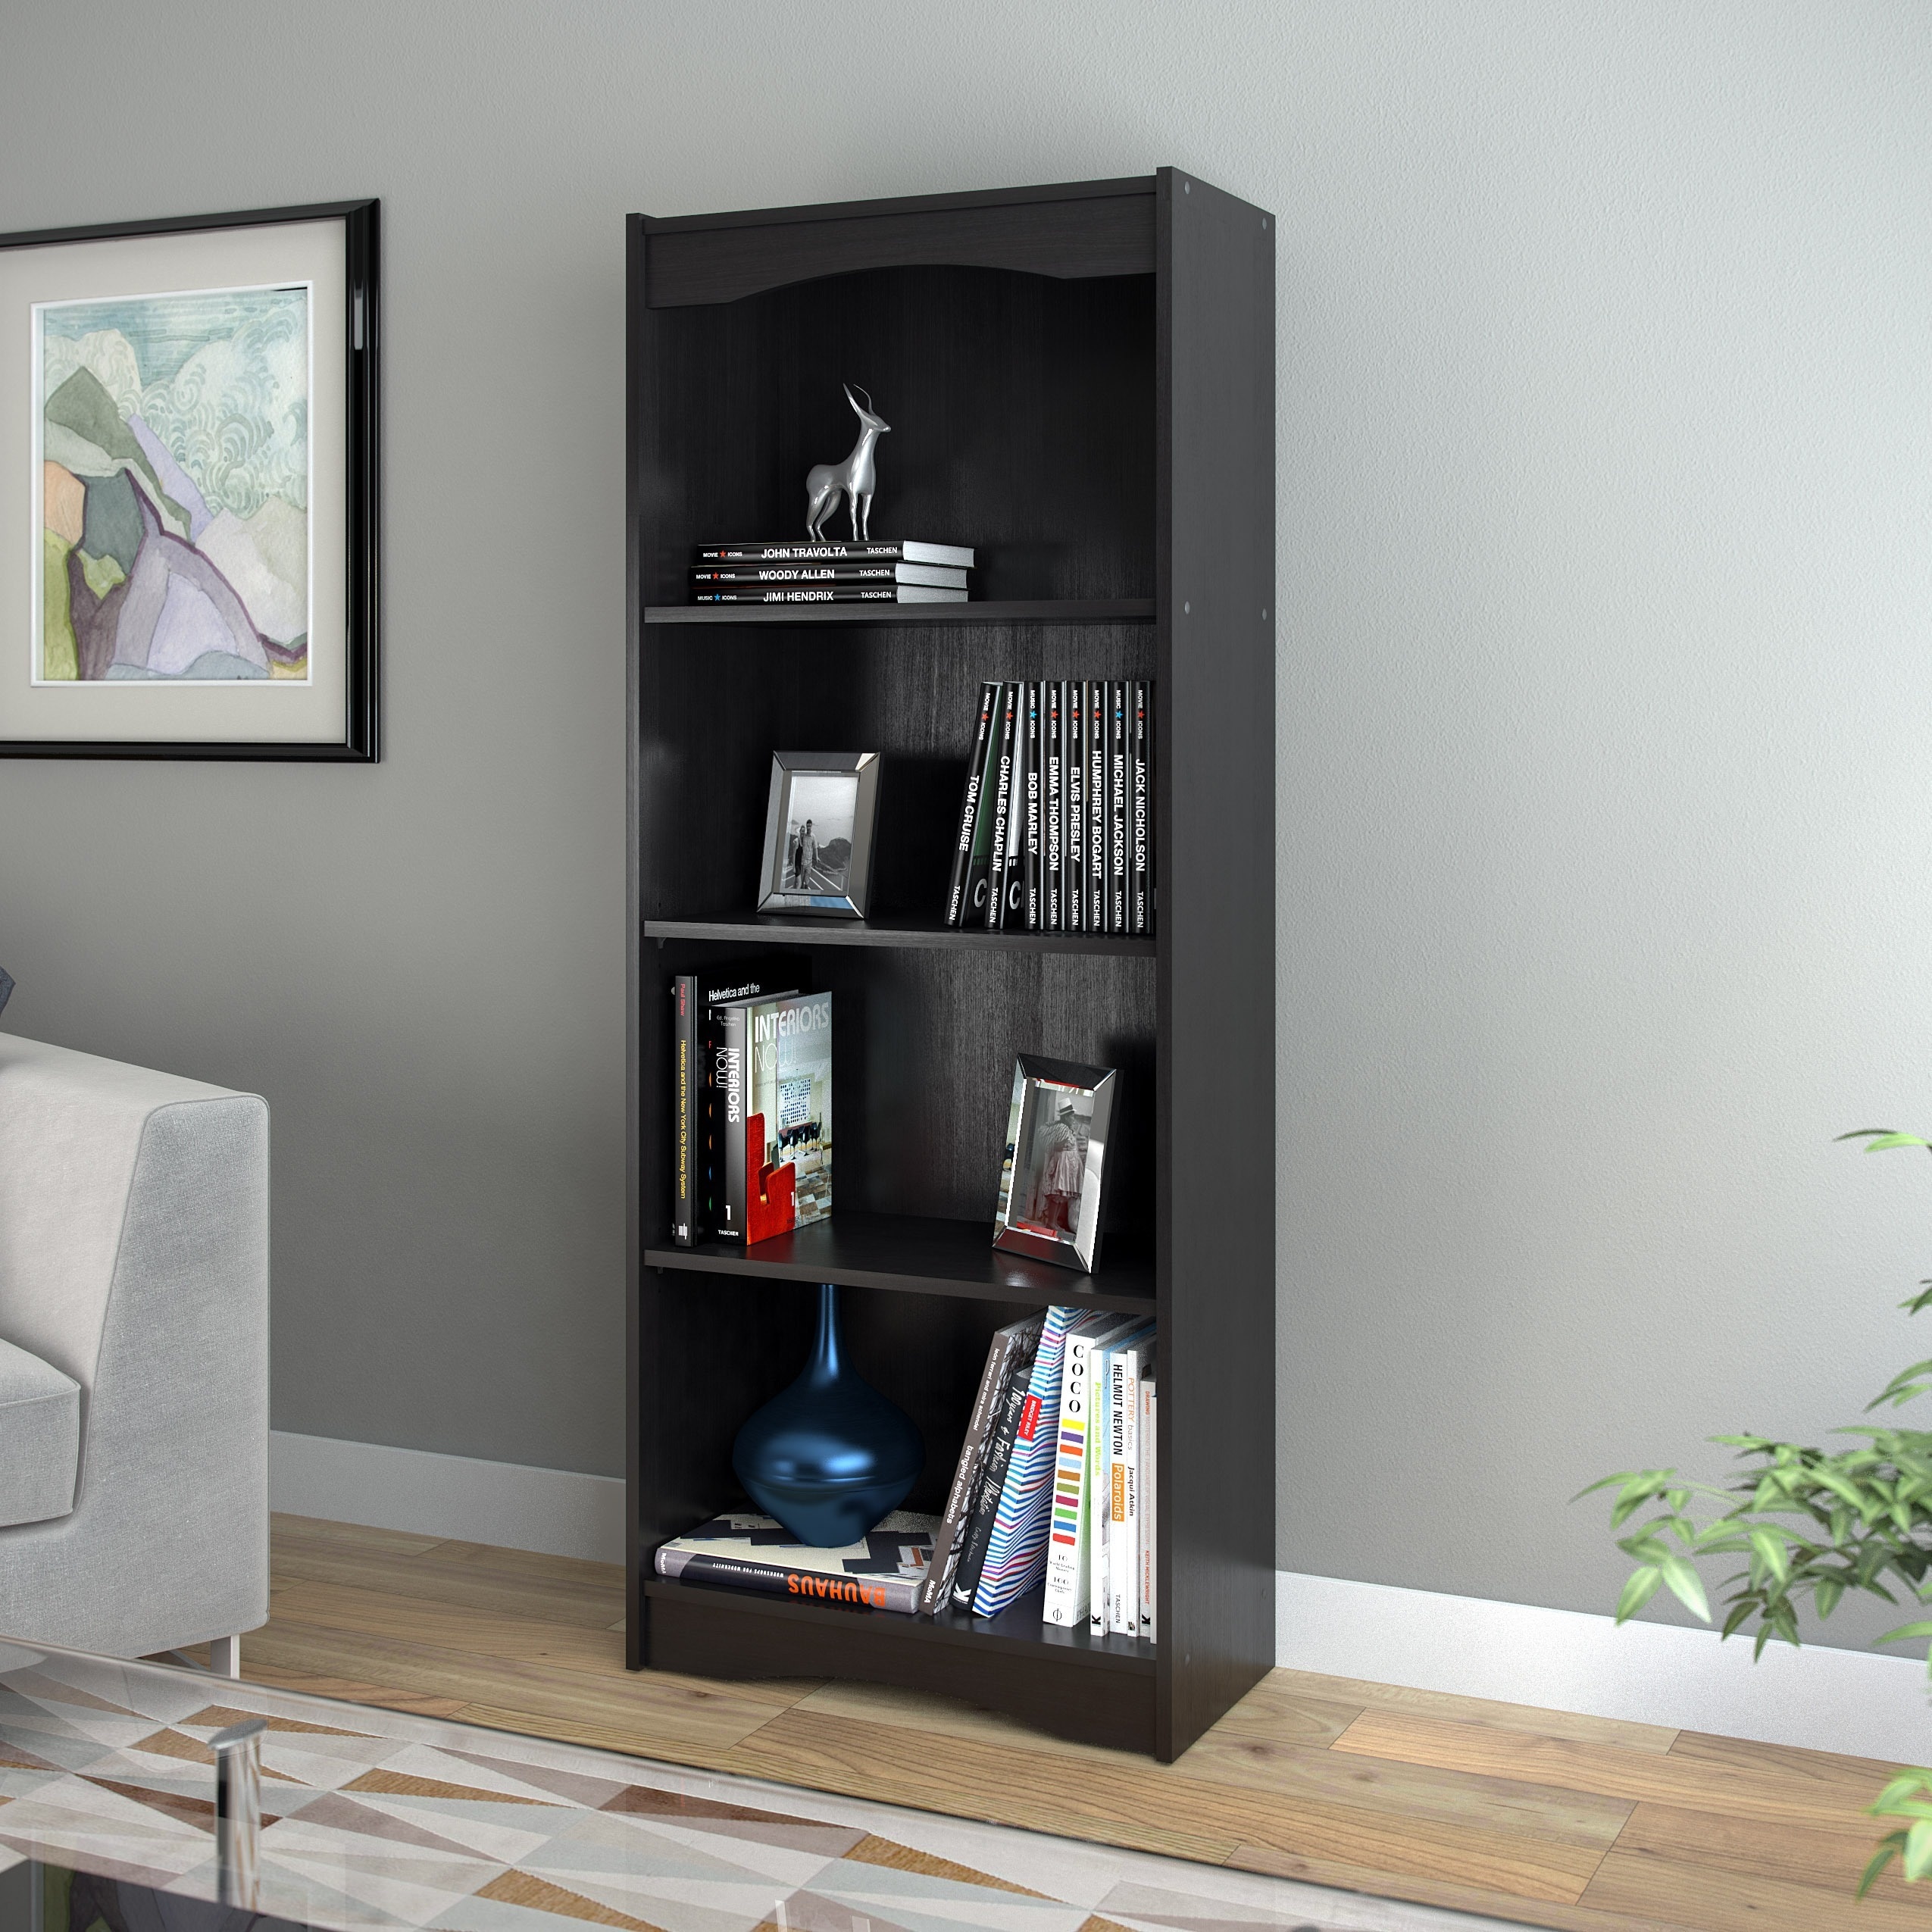 4 foot wide black book shelf mountable